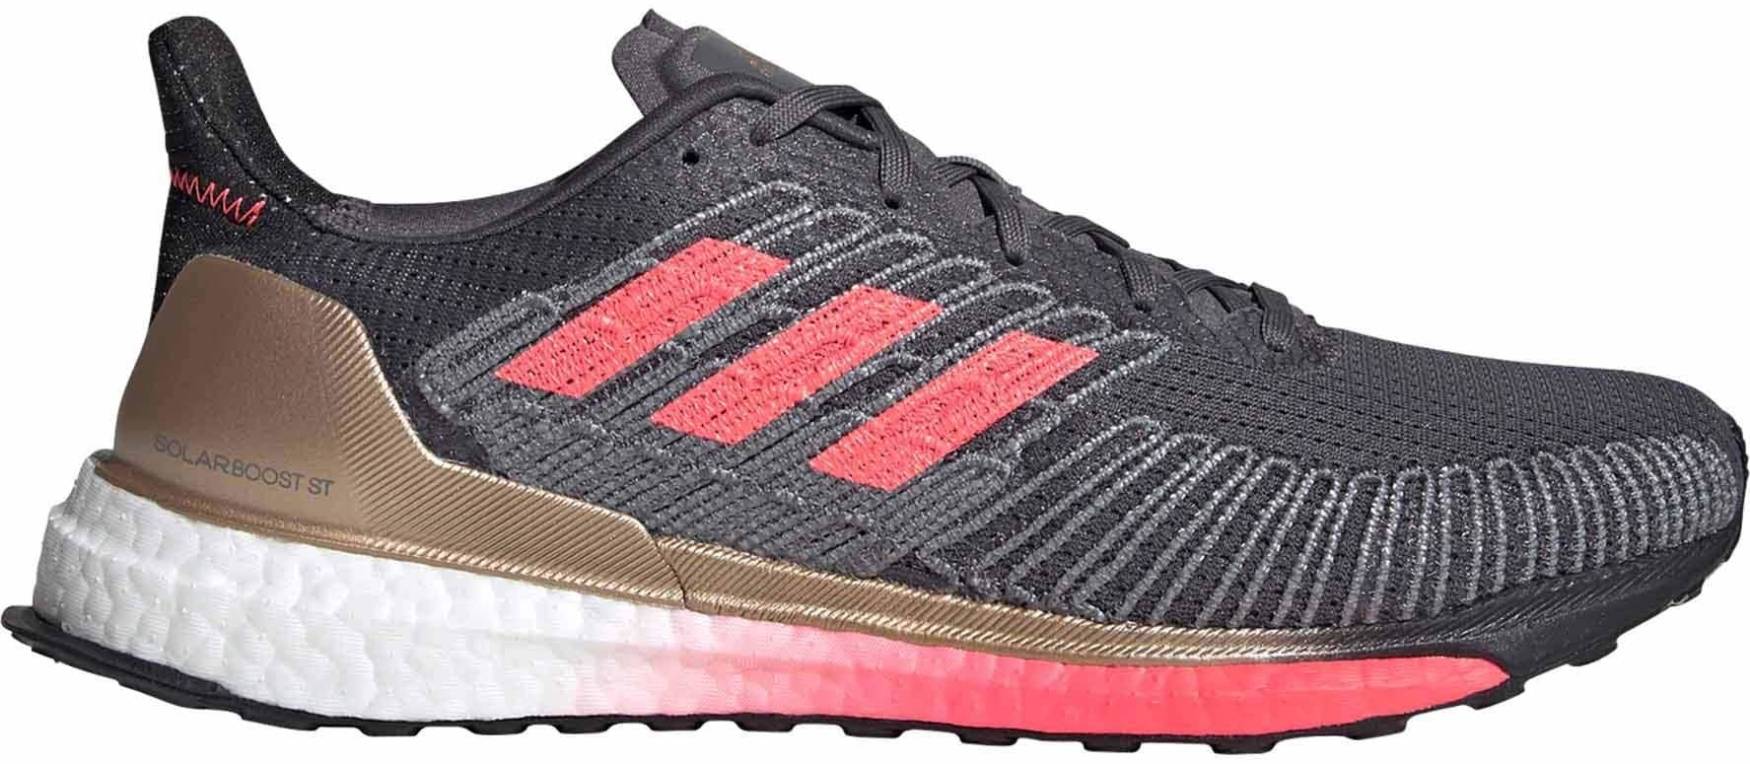 adidas Women's solar boost st 19 running shoes